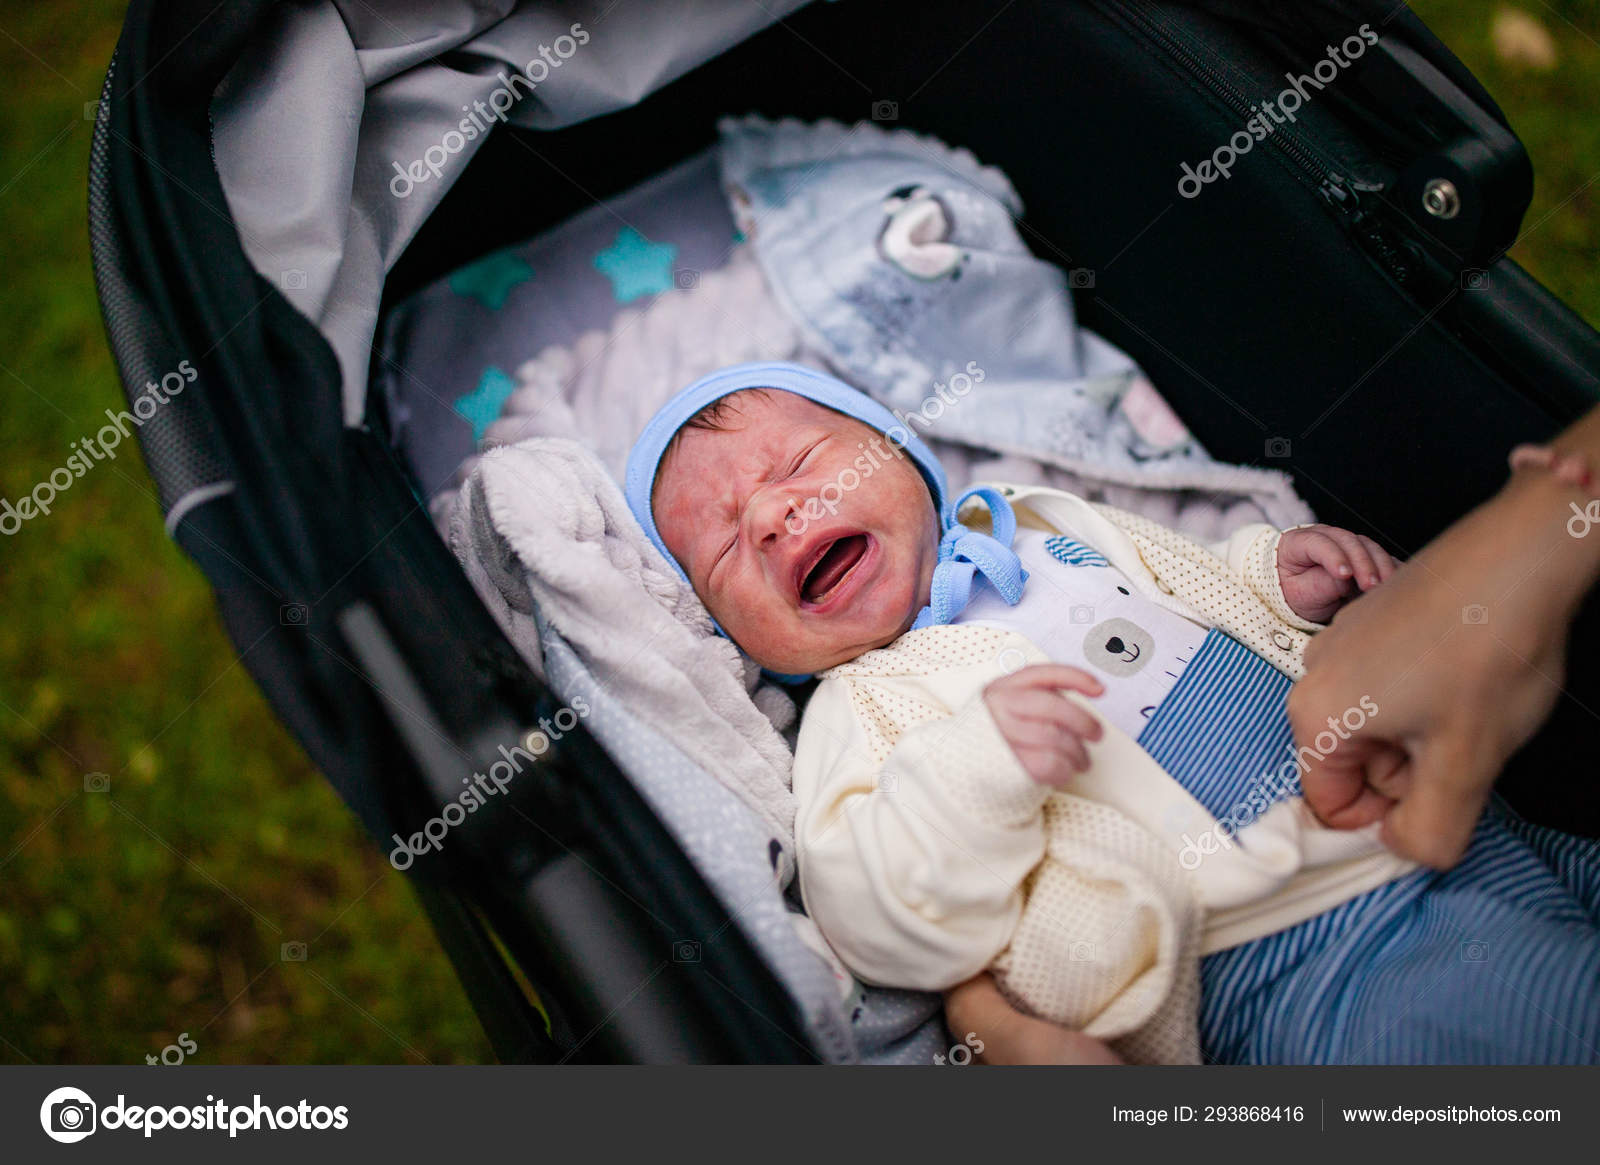 baby cries in pram